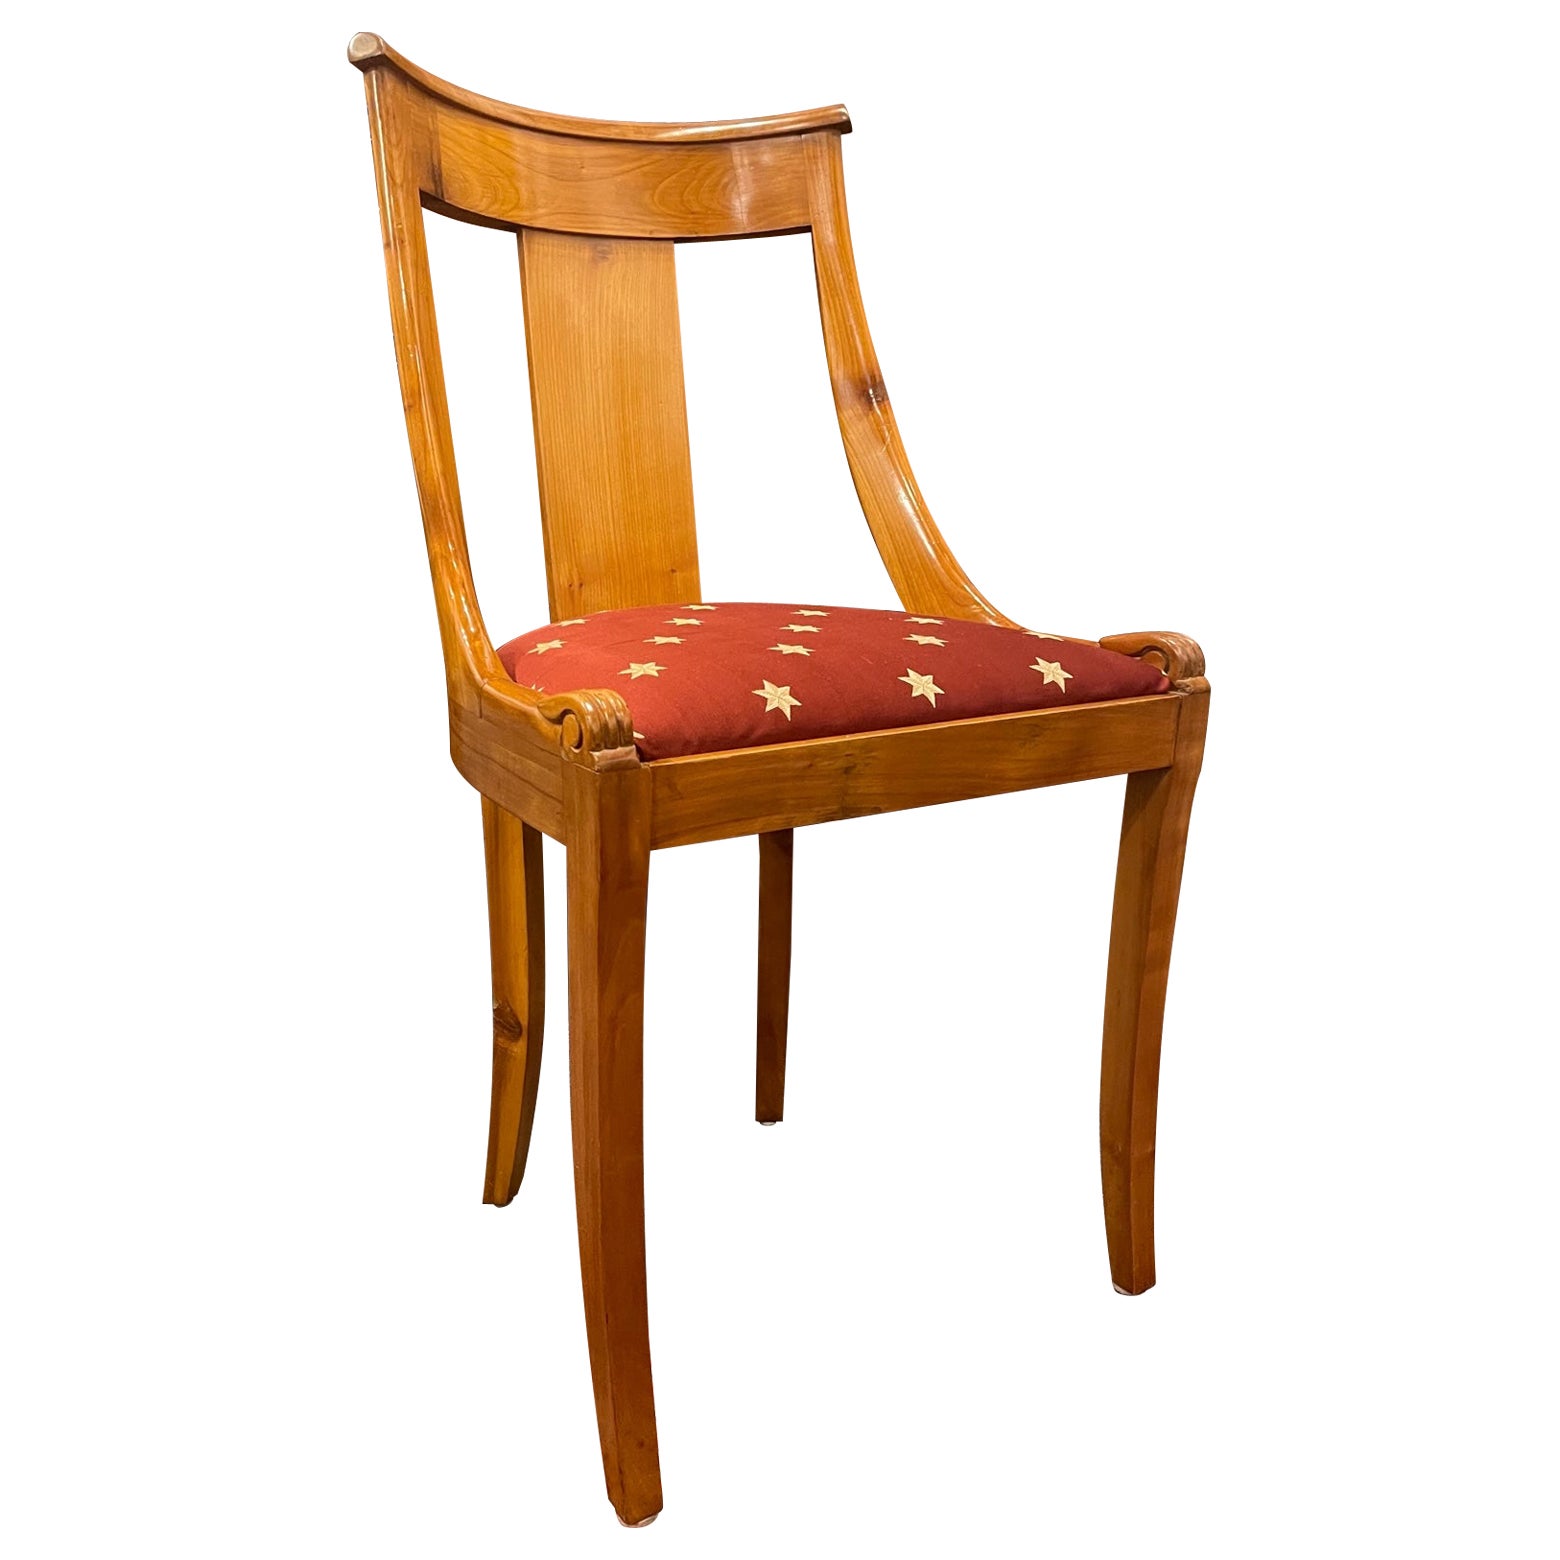 French Art Deco Gondole Chair, Circa 1930s